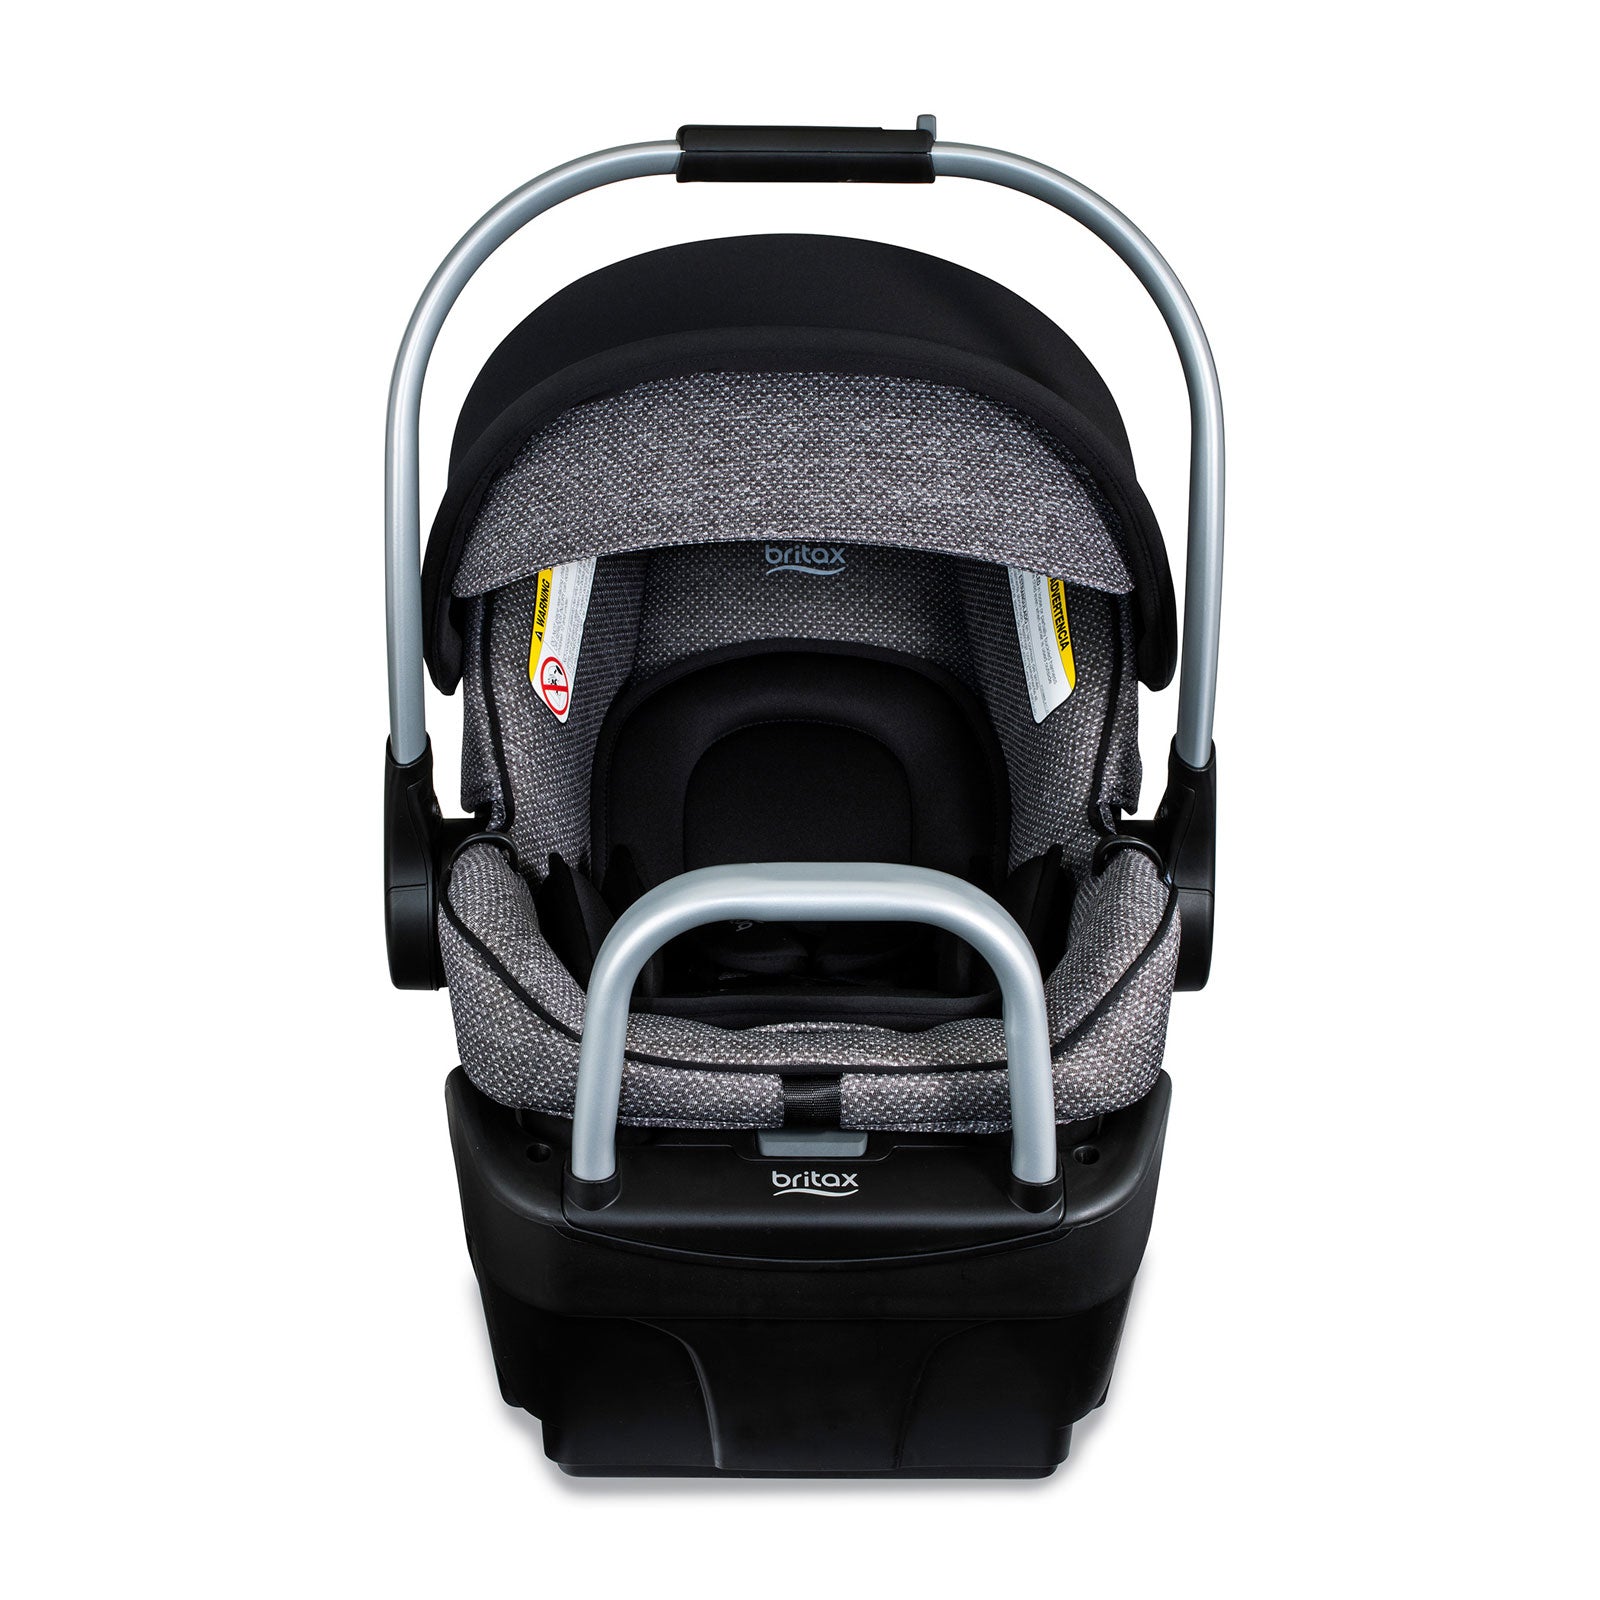 Britax Willow SC Infant Car Seat - Pindot Onyx